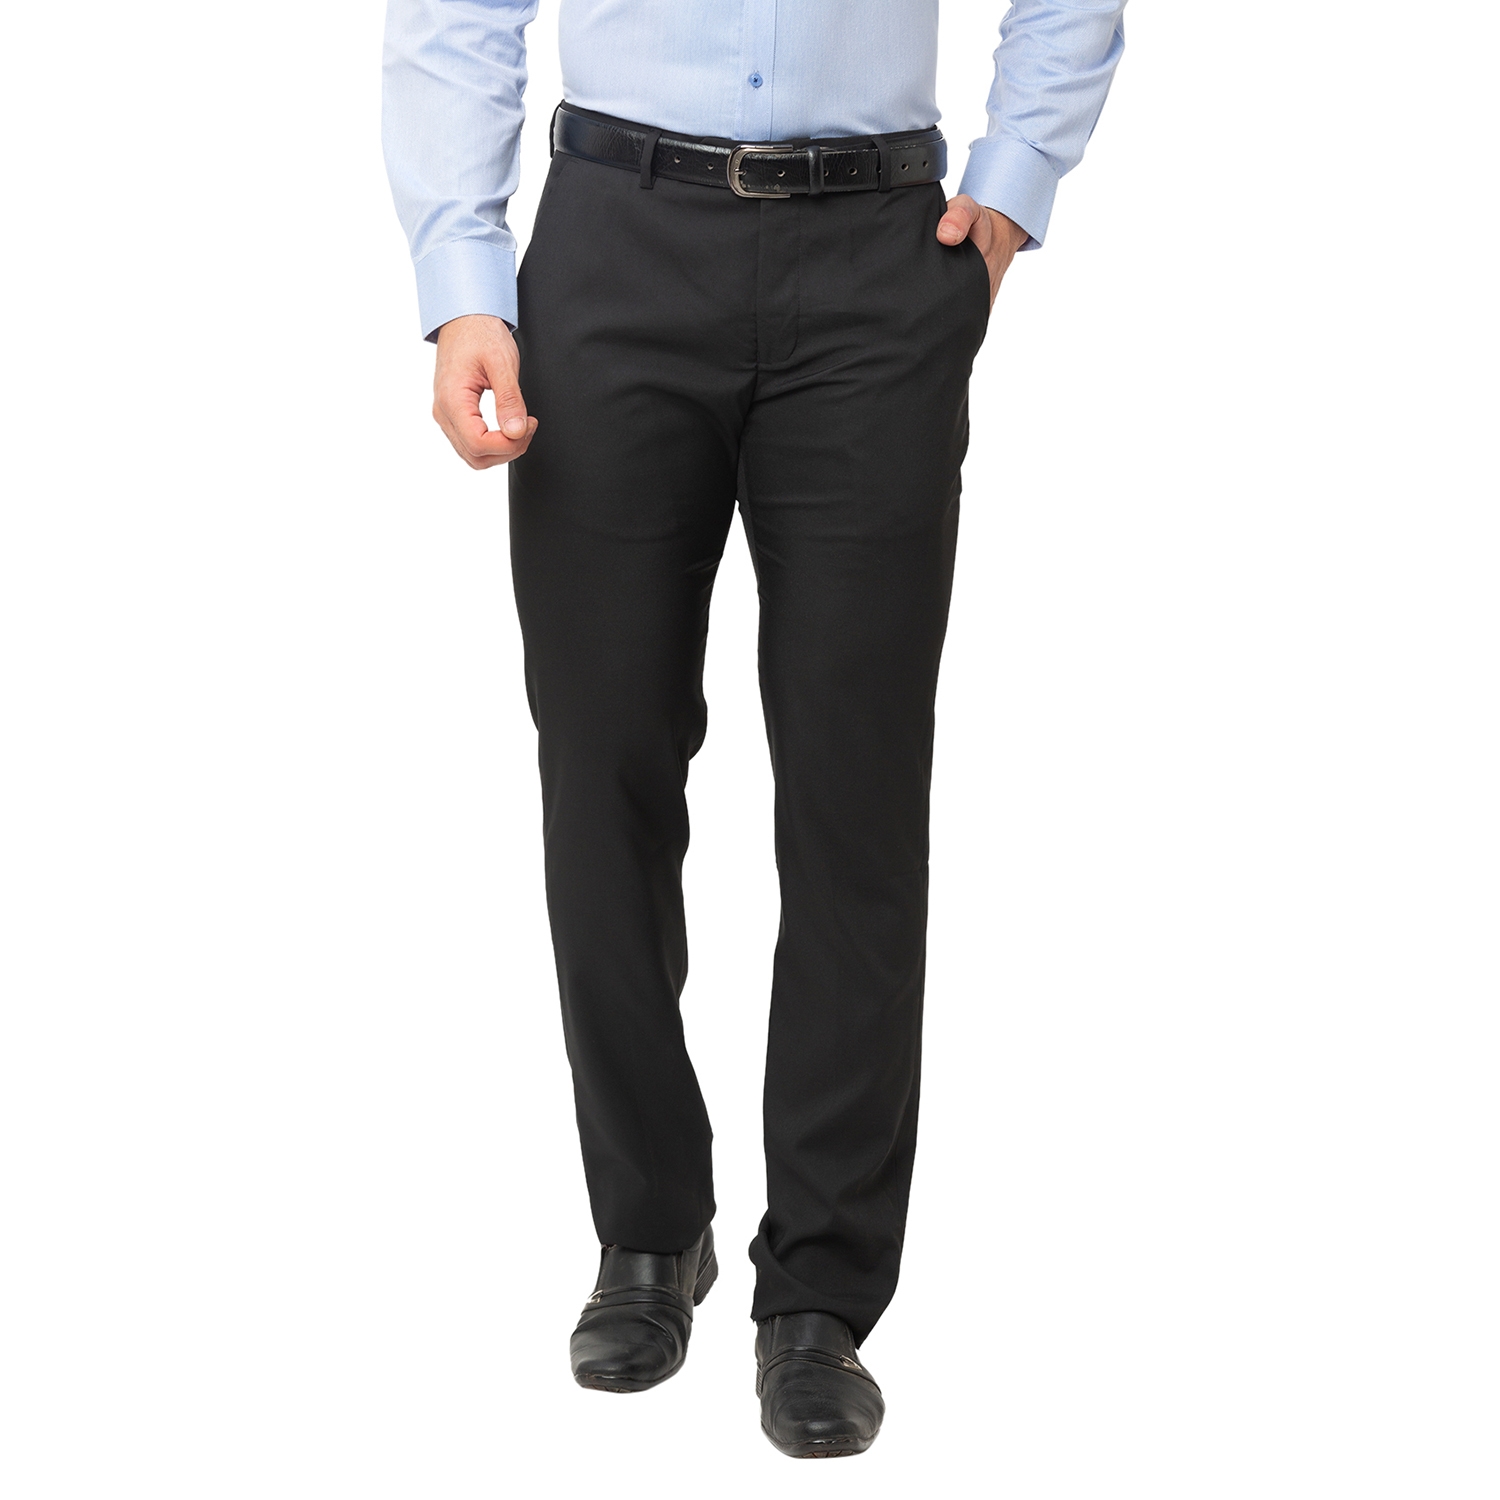 globus | Men's Black Cotton Blend Solid Formal Trousers 0